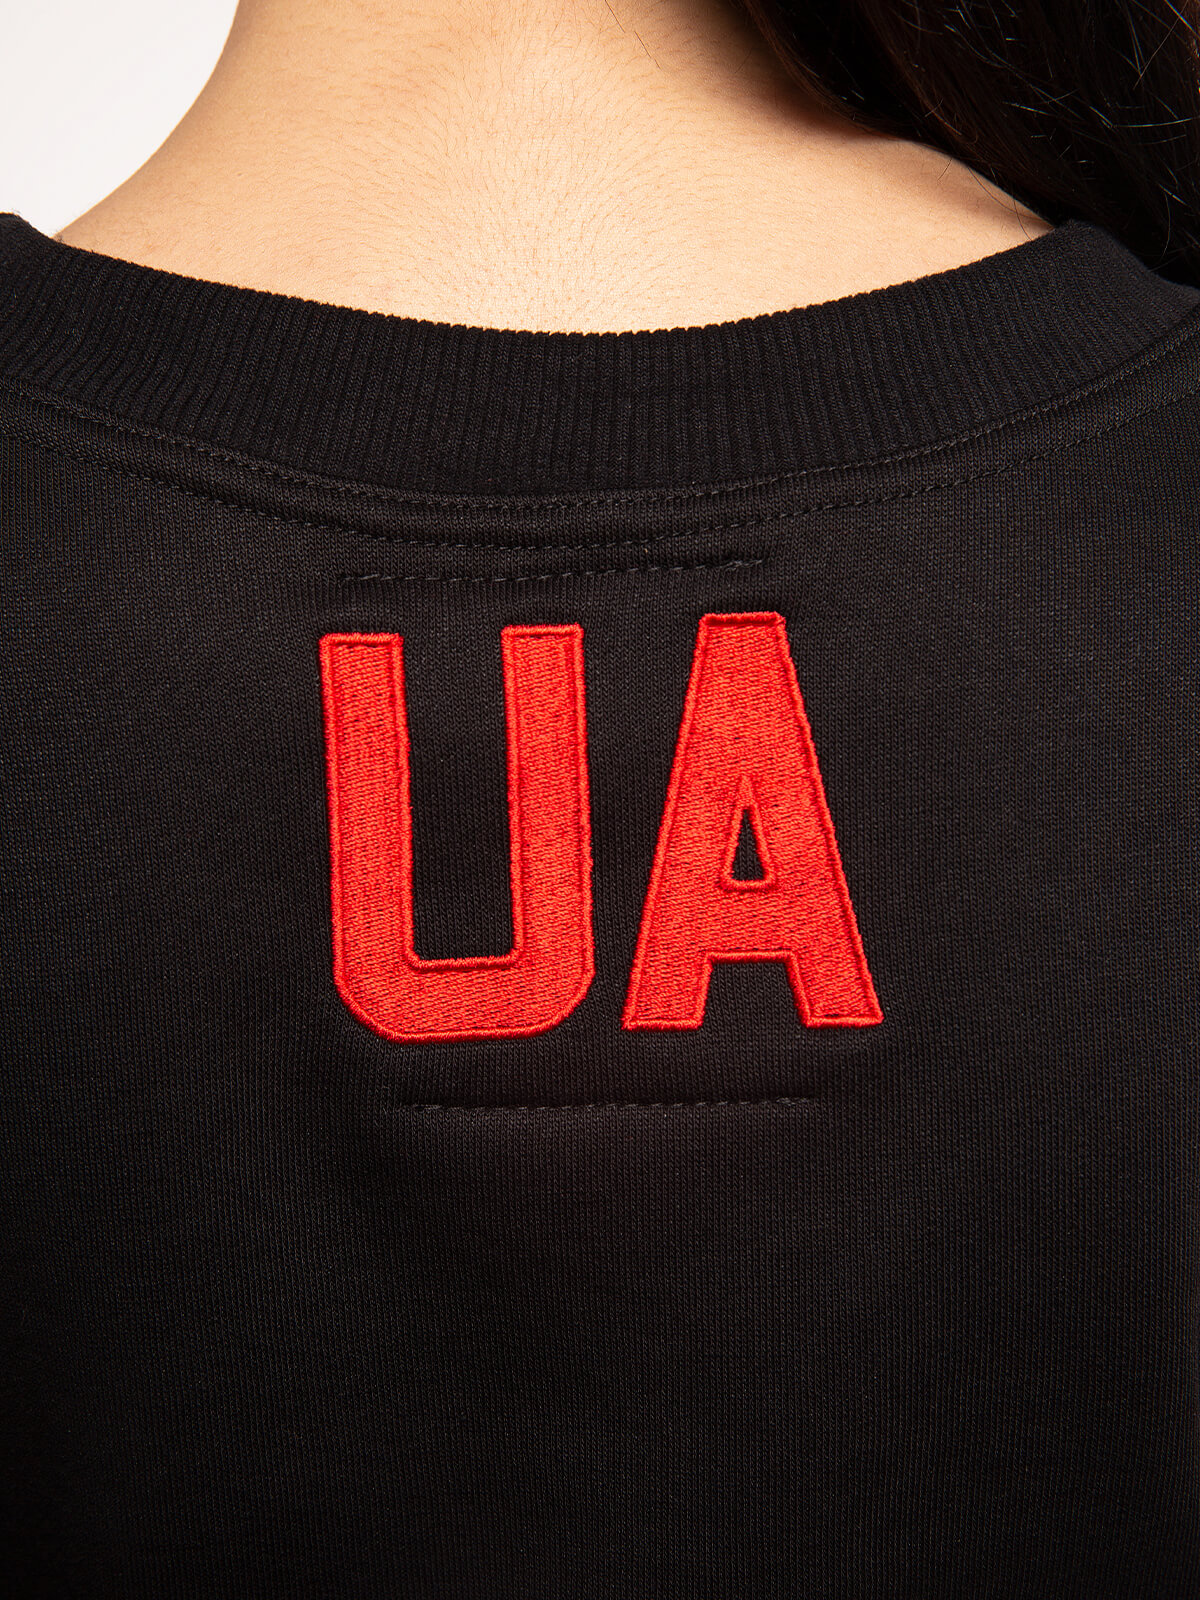 Women's Sweatshirt Ua. Color black. 
Size worn by the model: XS.